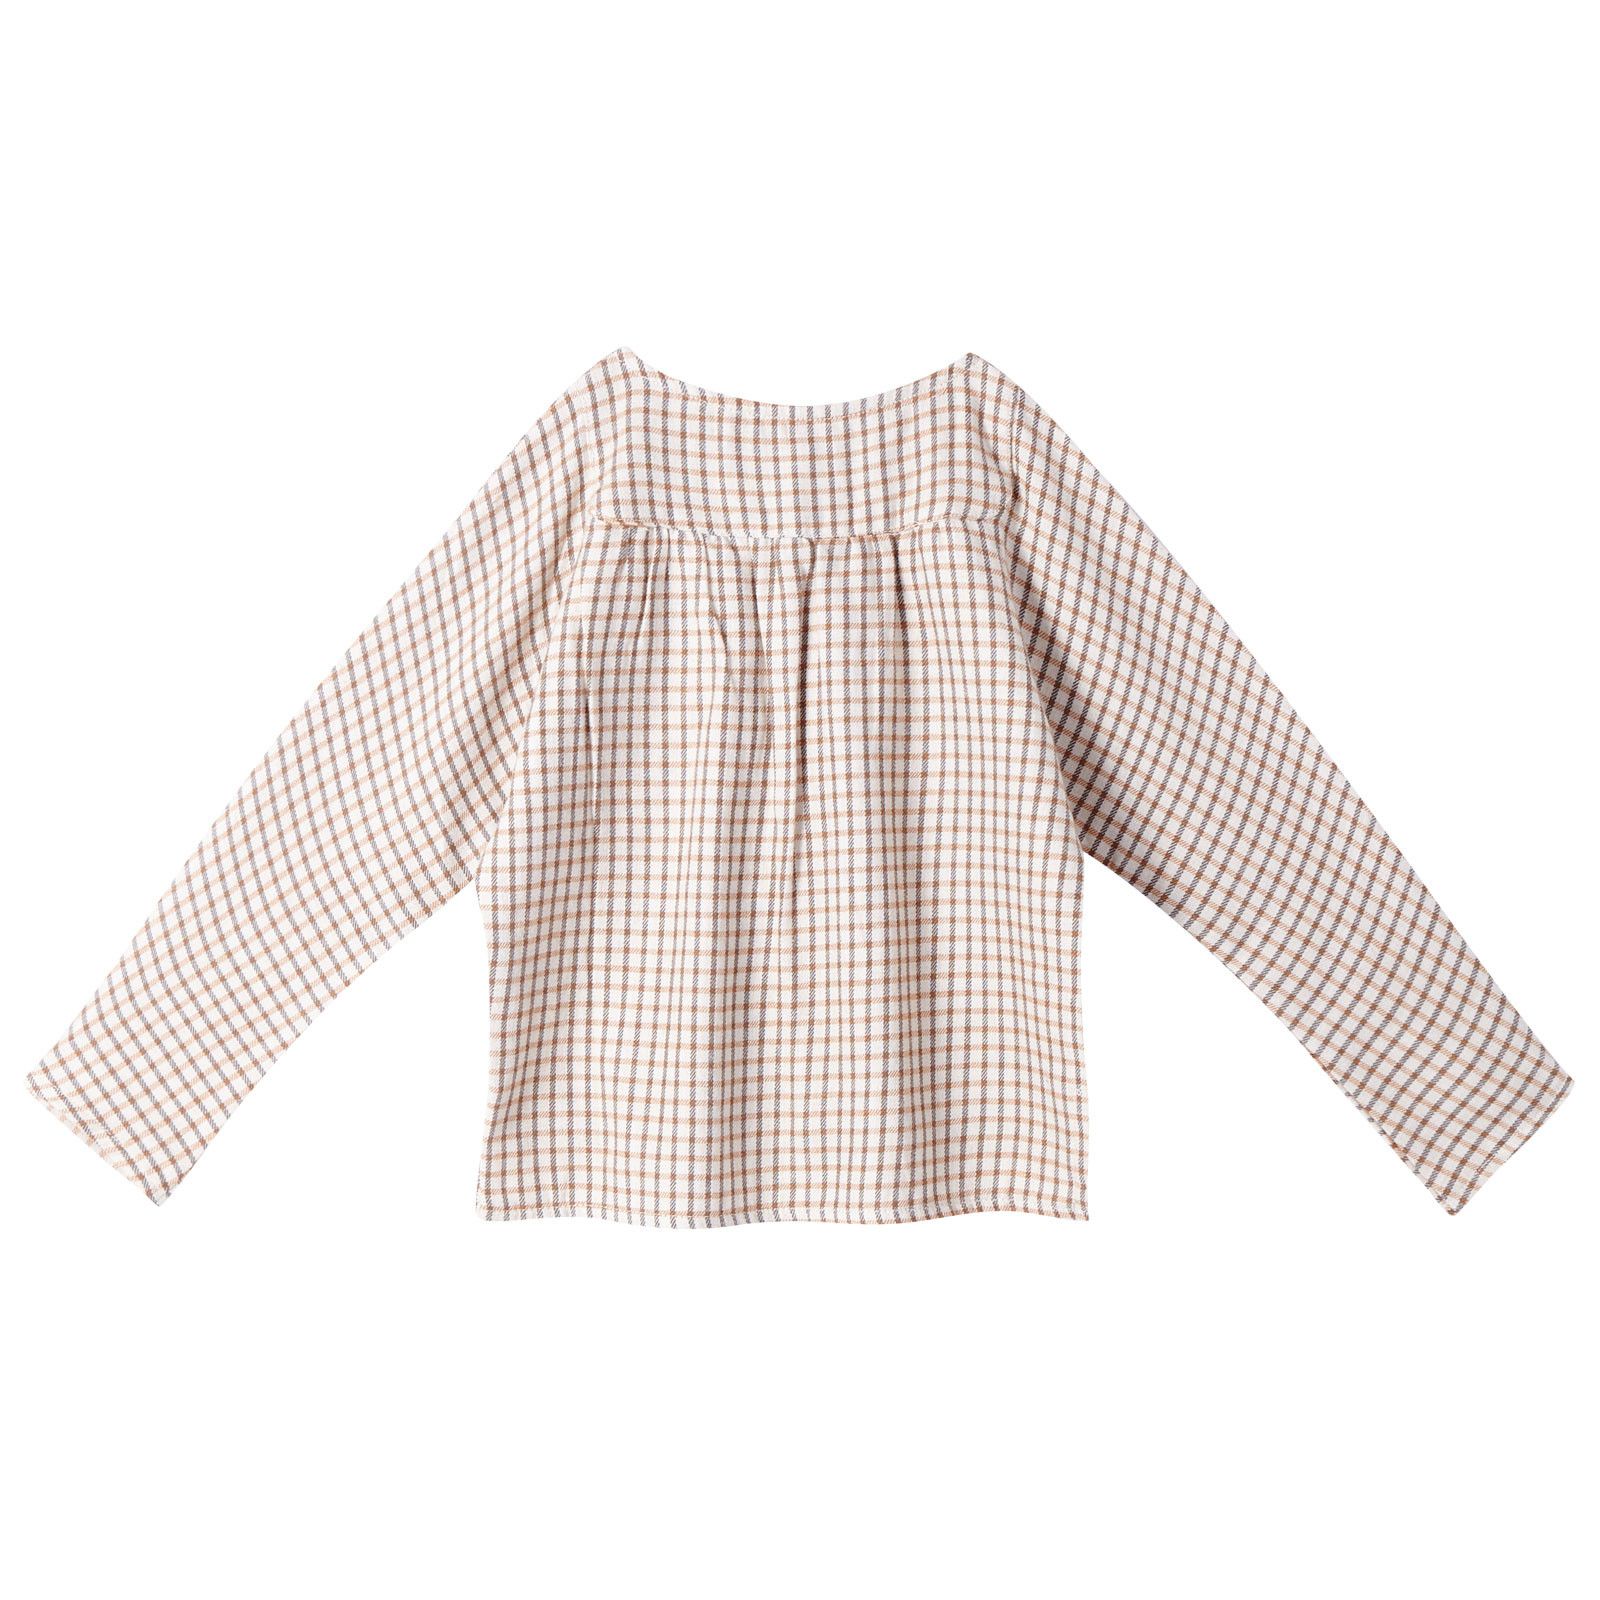 Boys Beige Spic Check Cotton Shirt - CÉMAROSE | Children's Fashion Store - 2